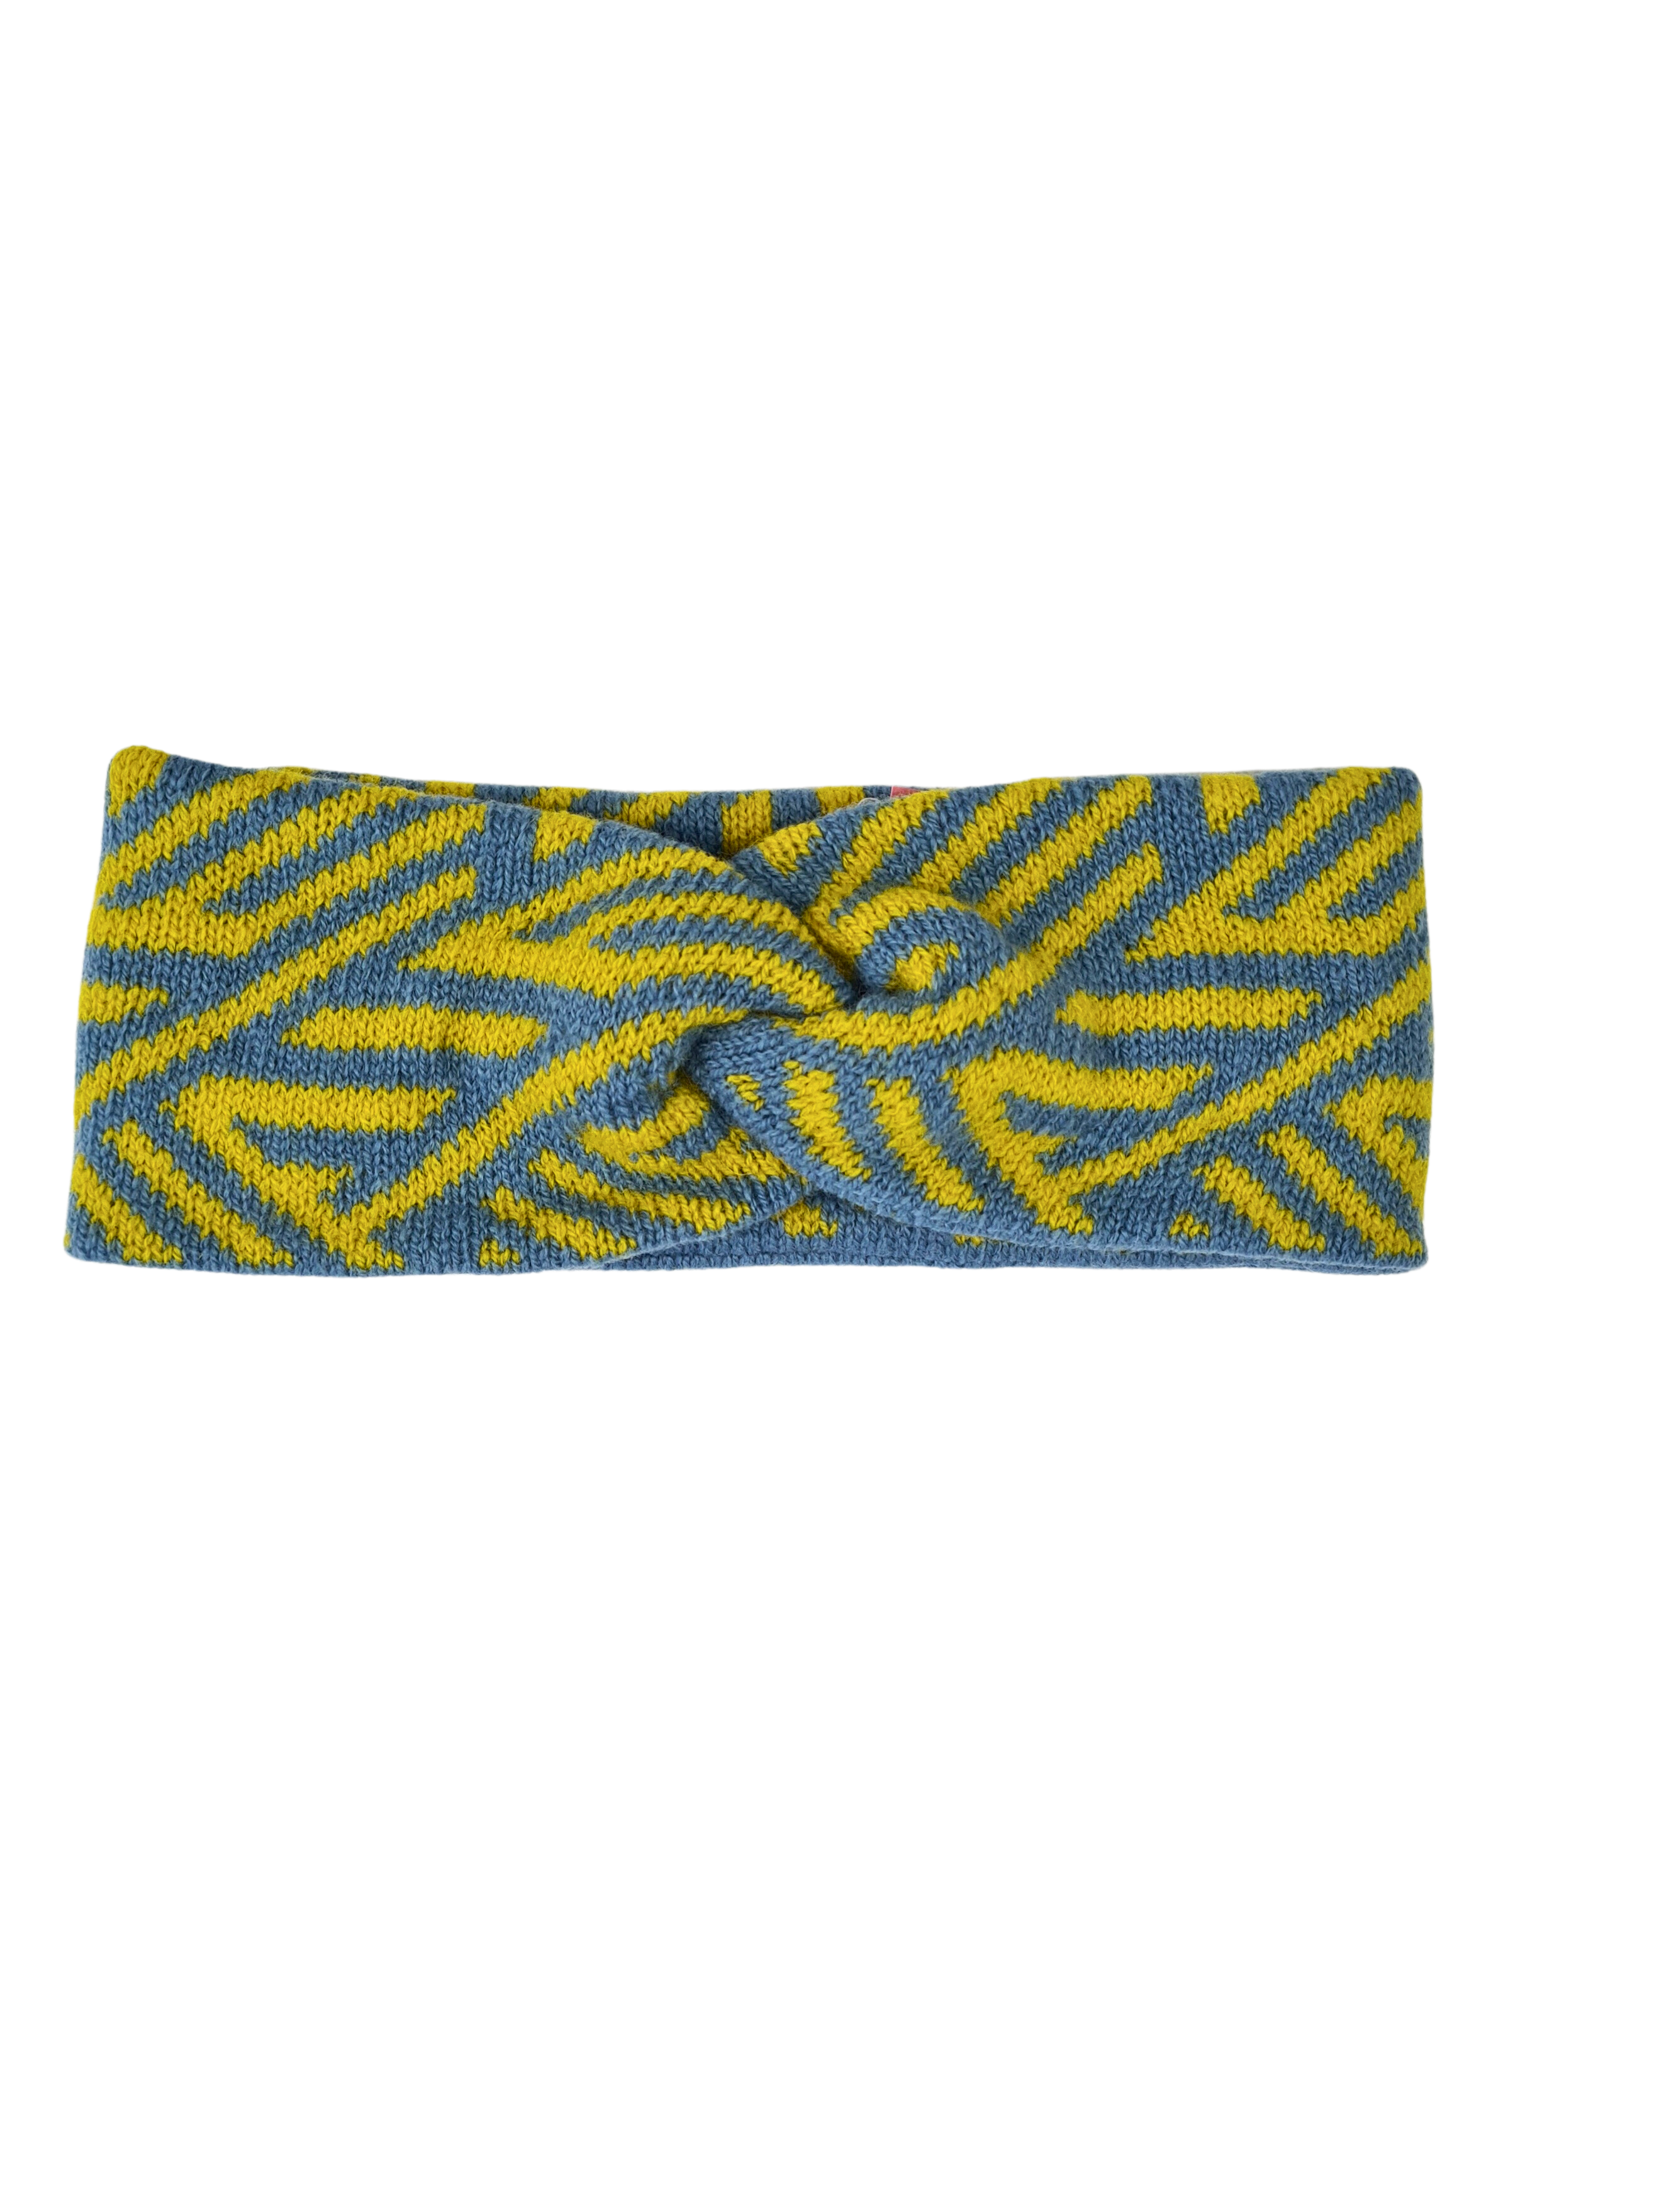 A yellow and blue twist headband. The headband has a geometric crosswise pattern.